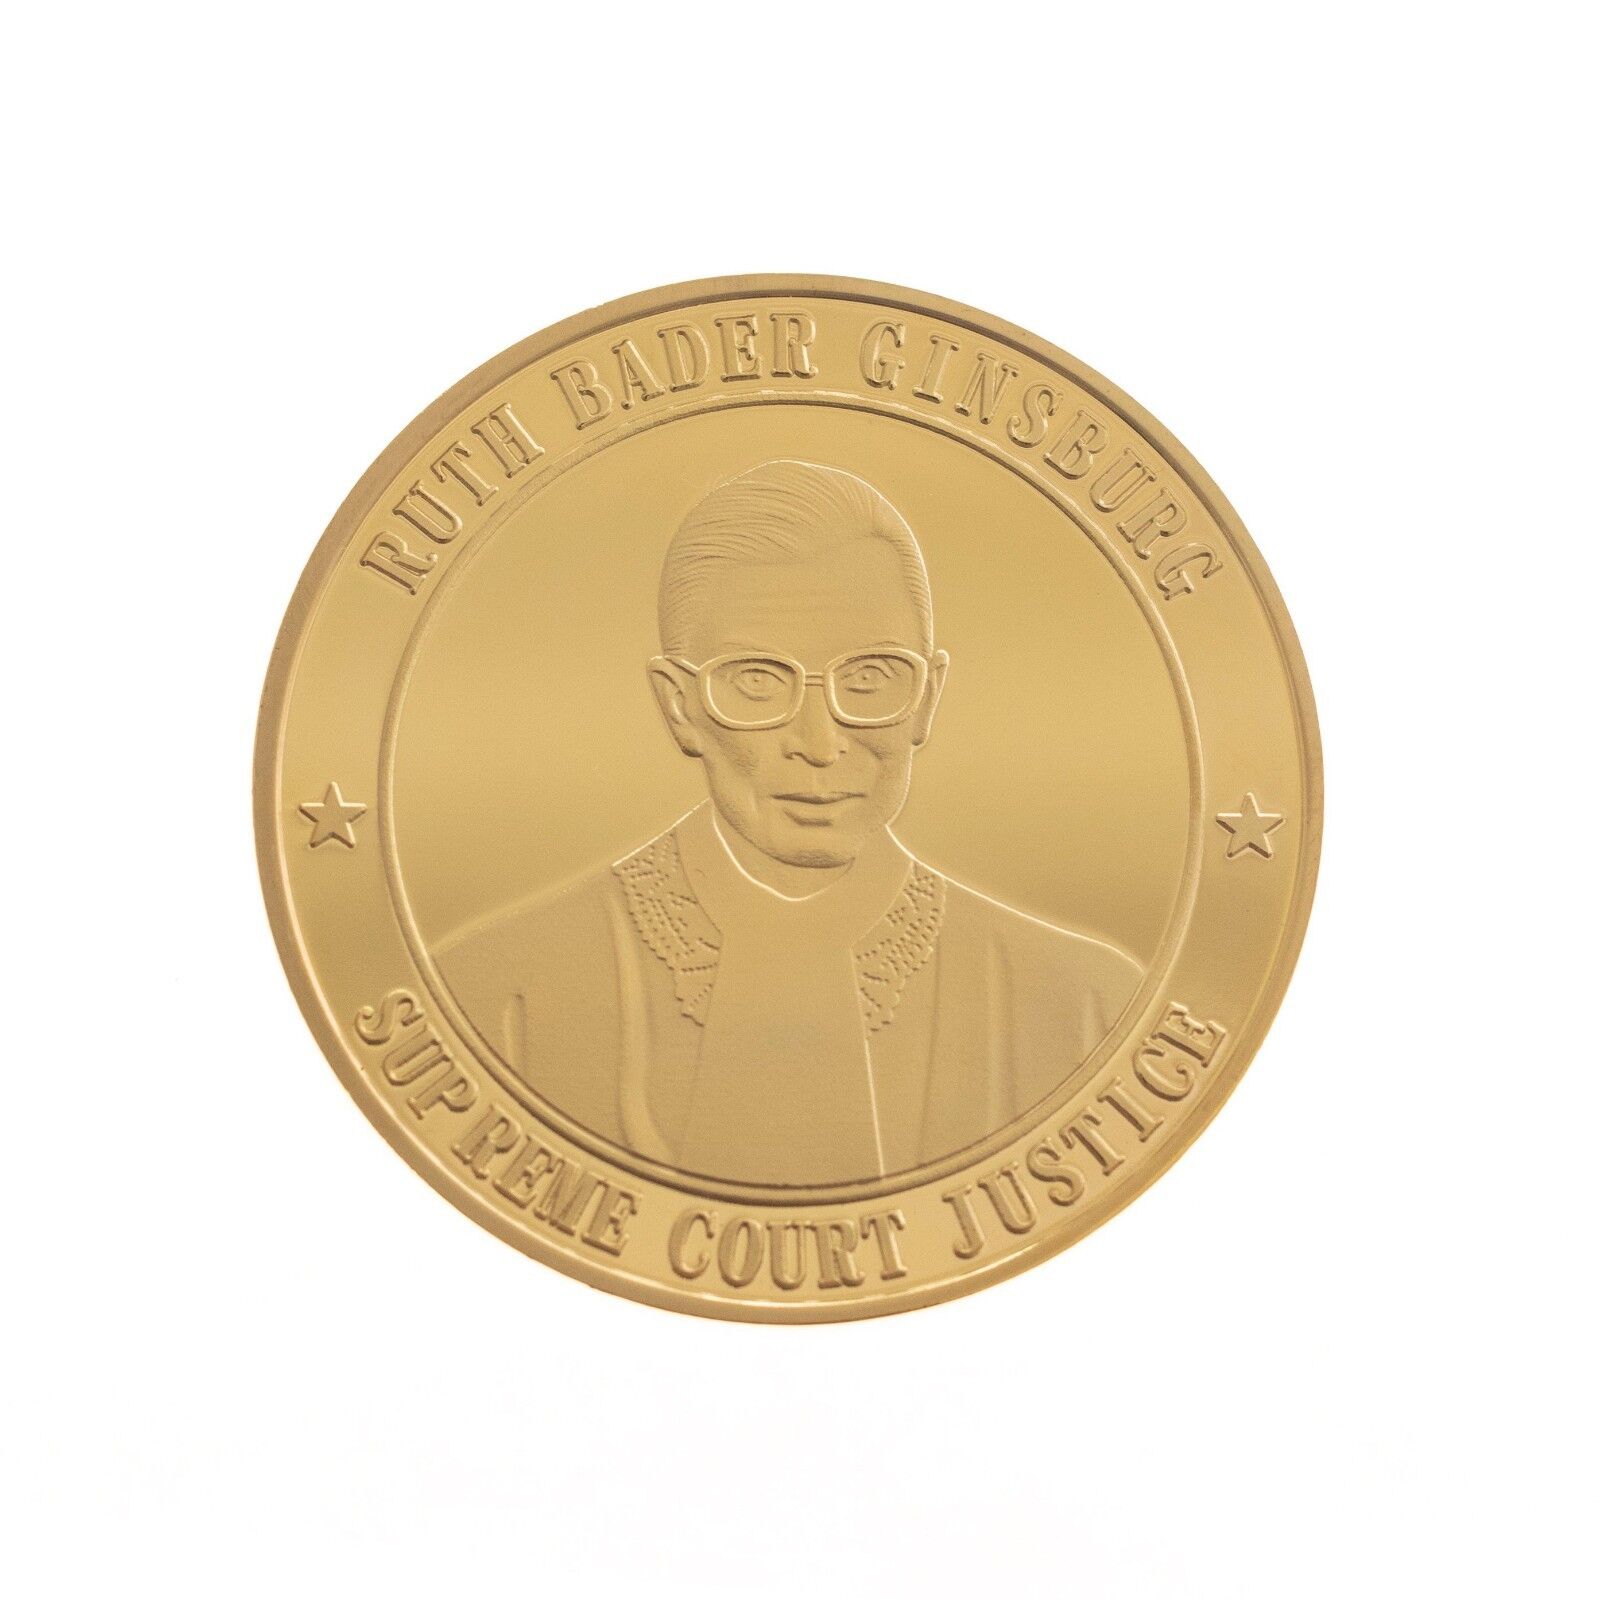 Ruth Bader Ginsburg (RBG) Commemorative Coin